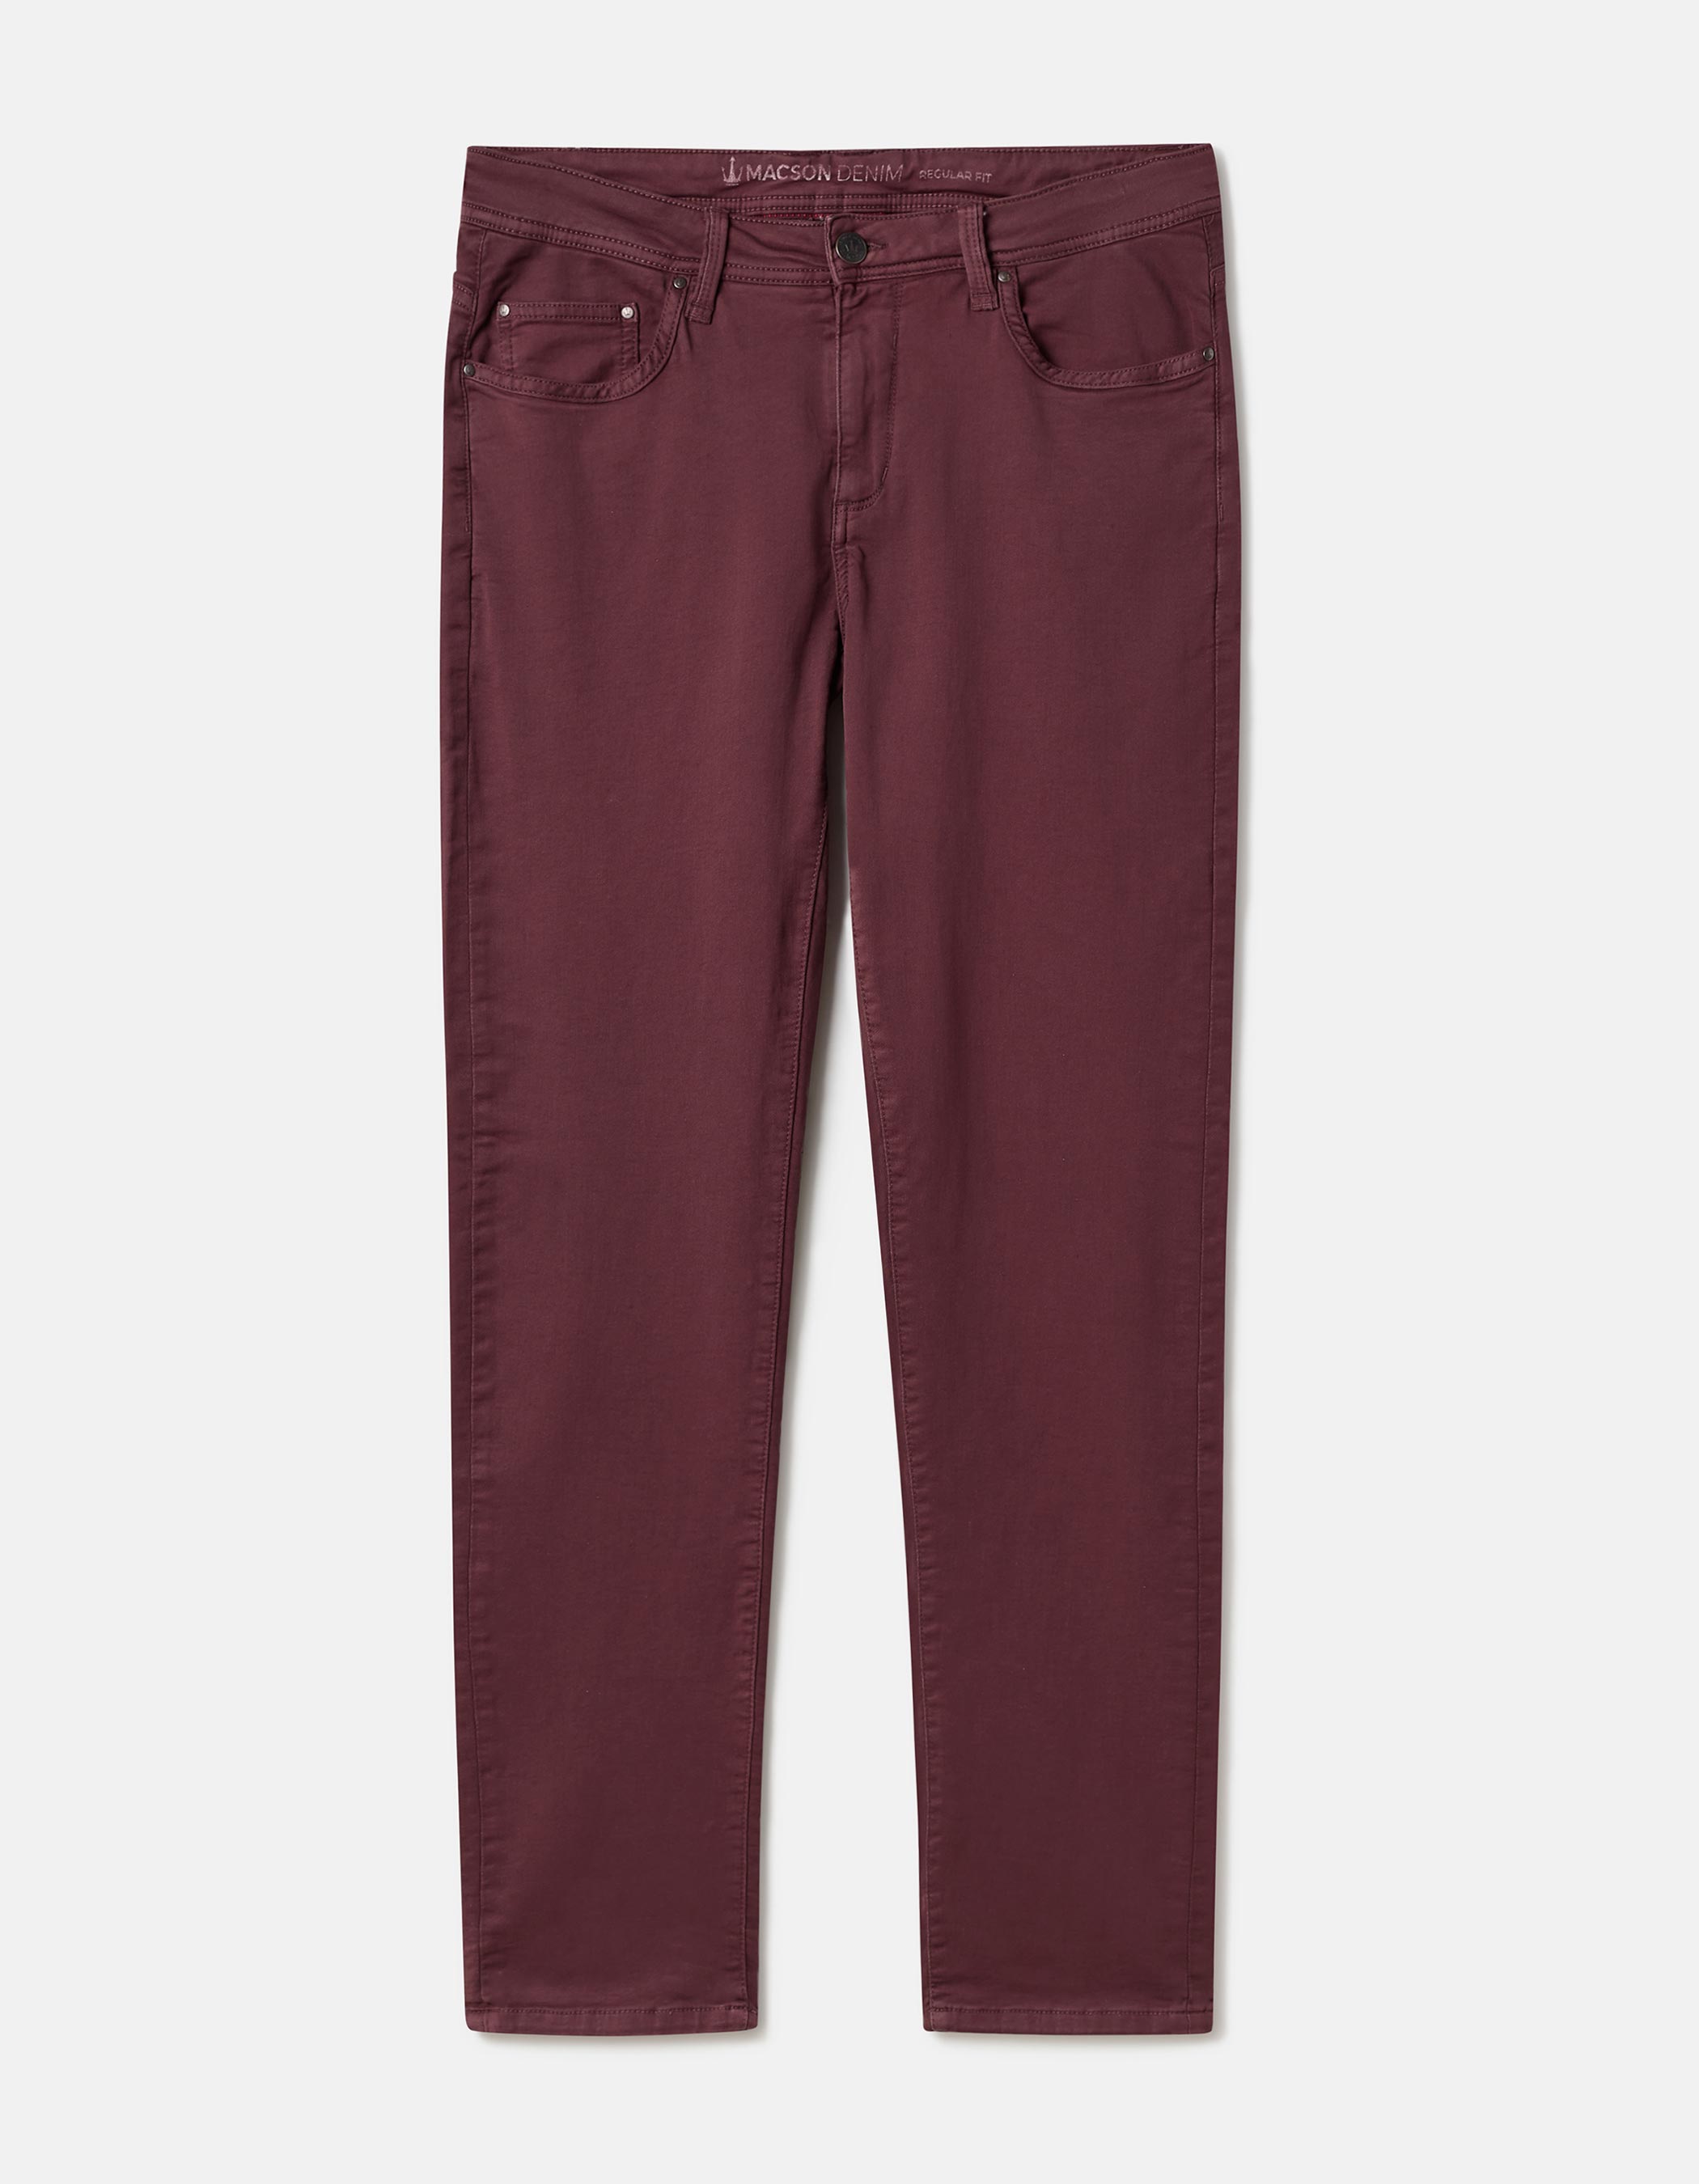 5-pocket comfort trousers